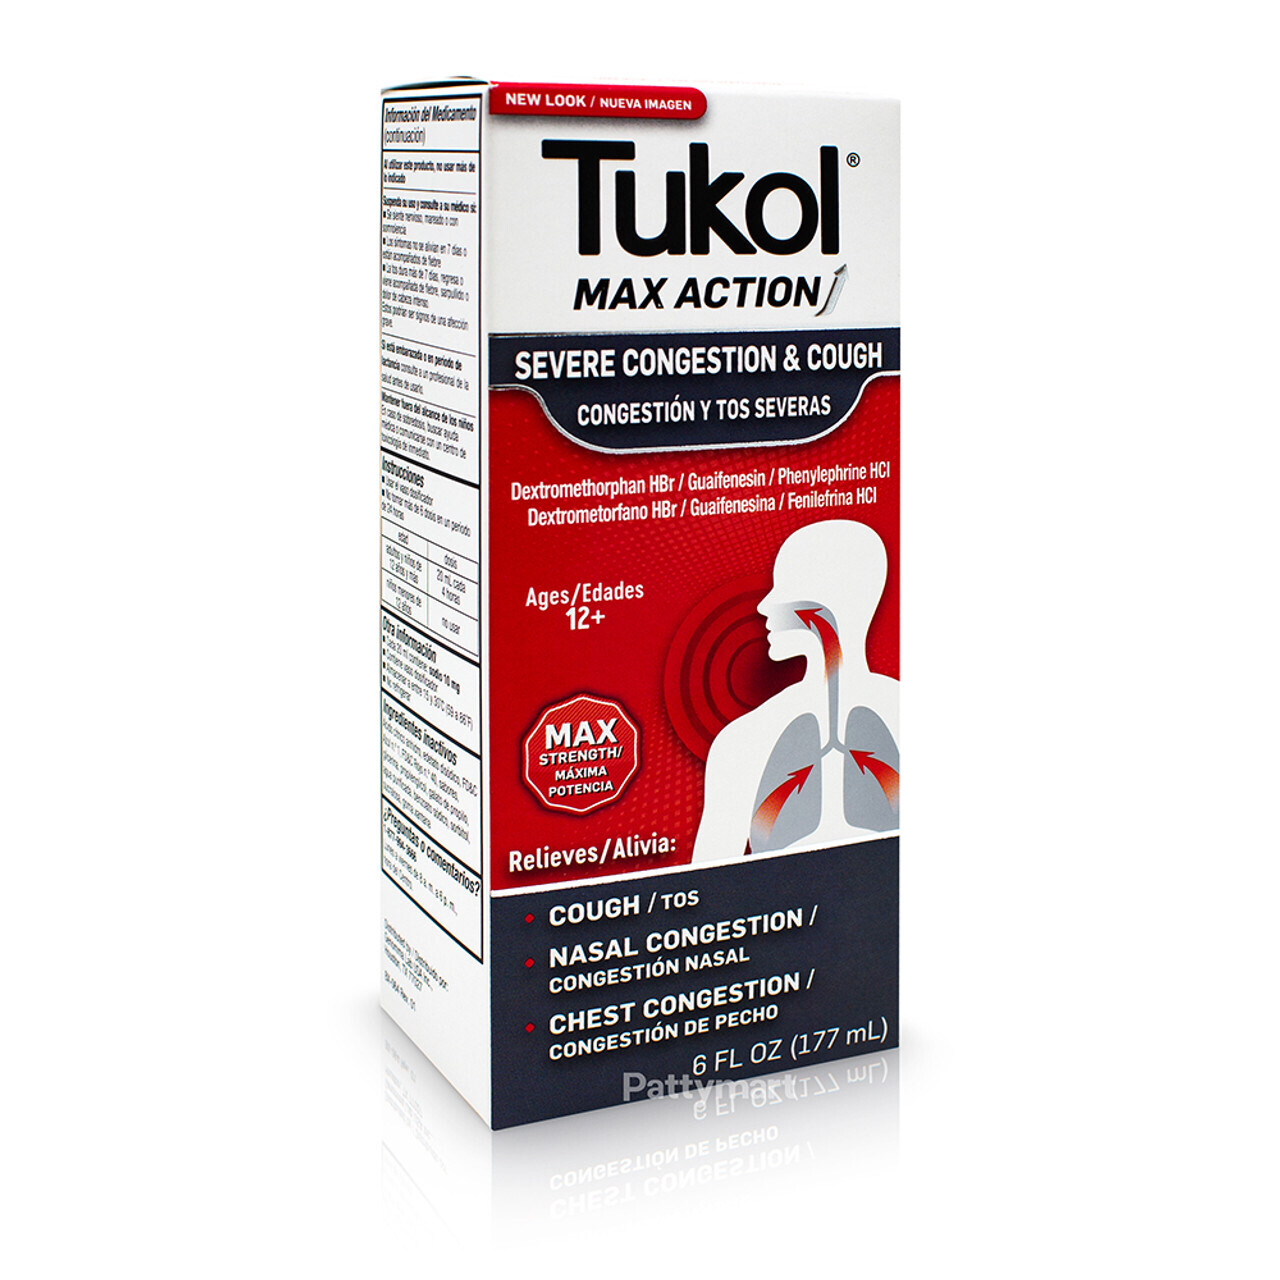 Tukol Max Action Severe Congestion & Cough